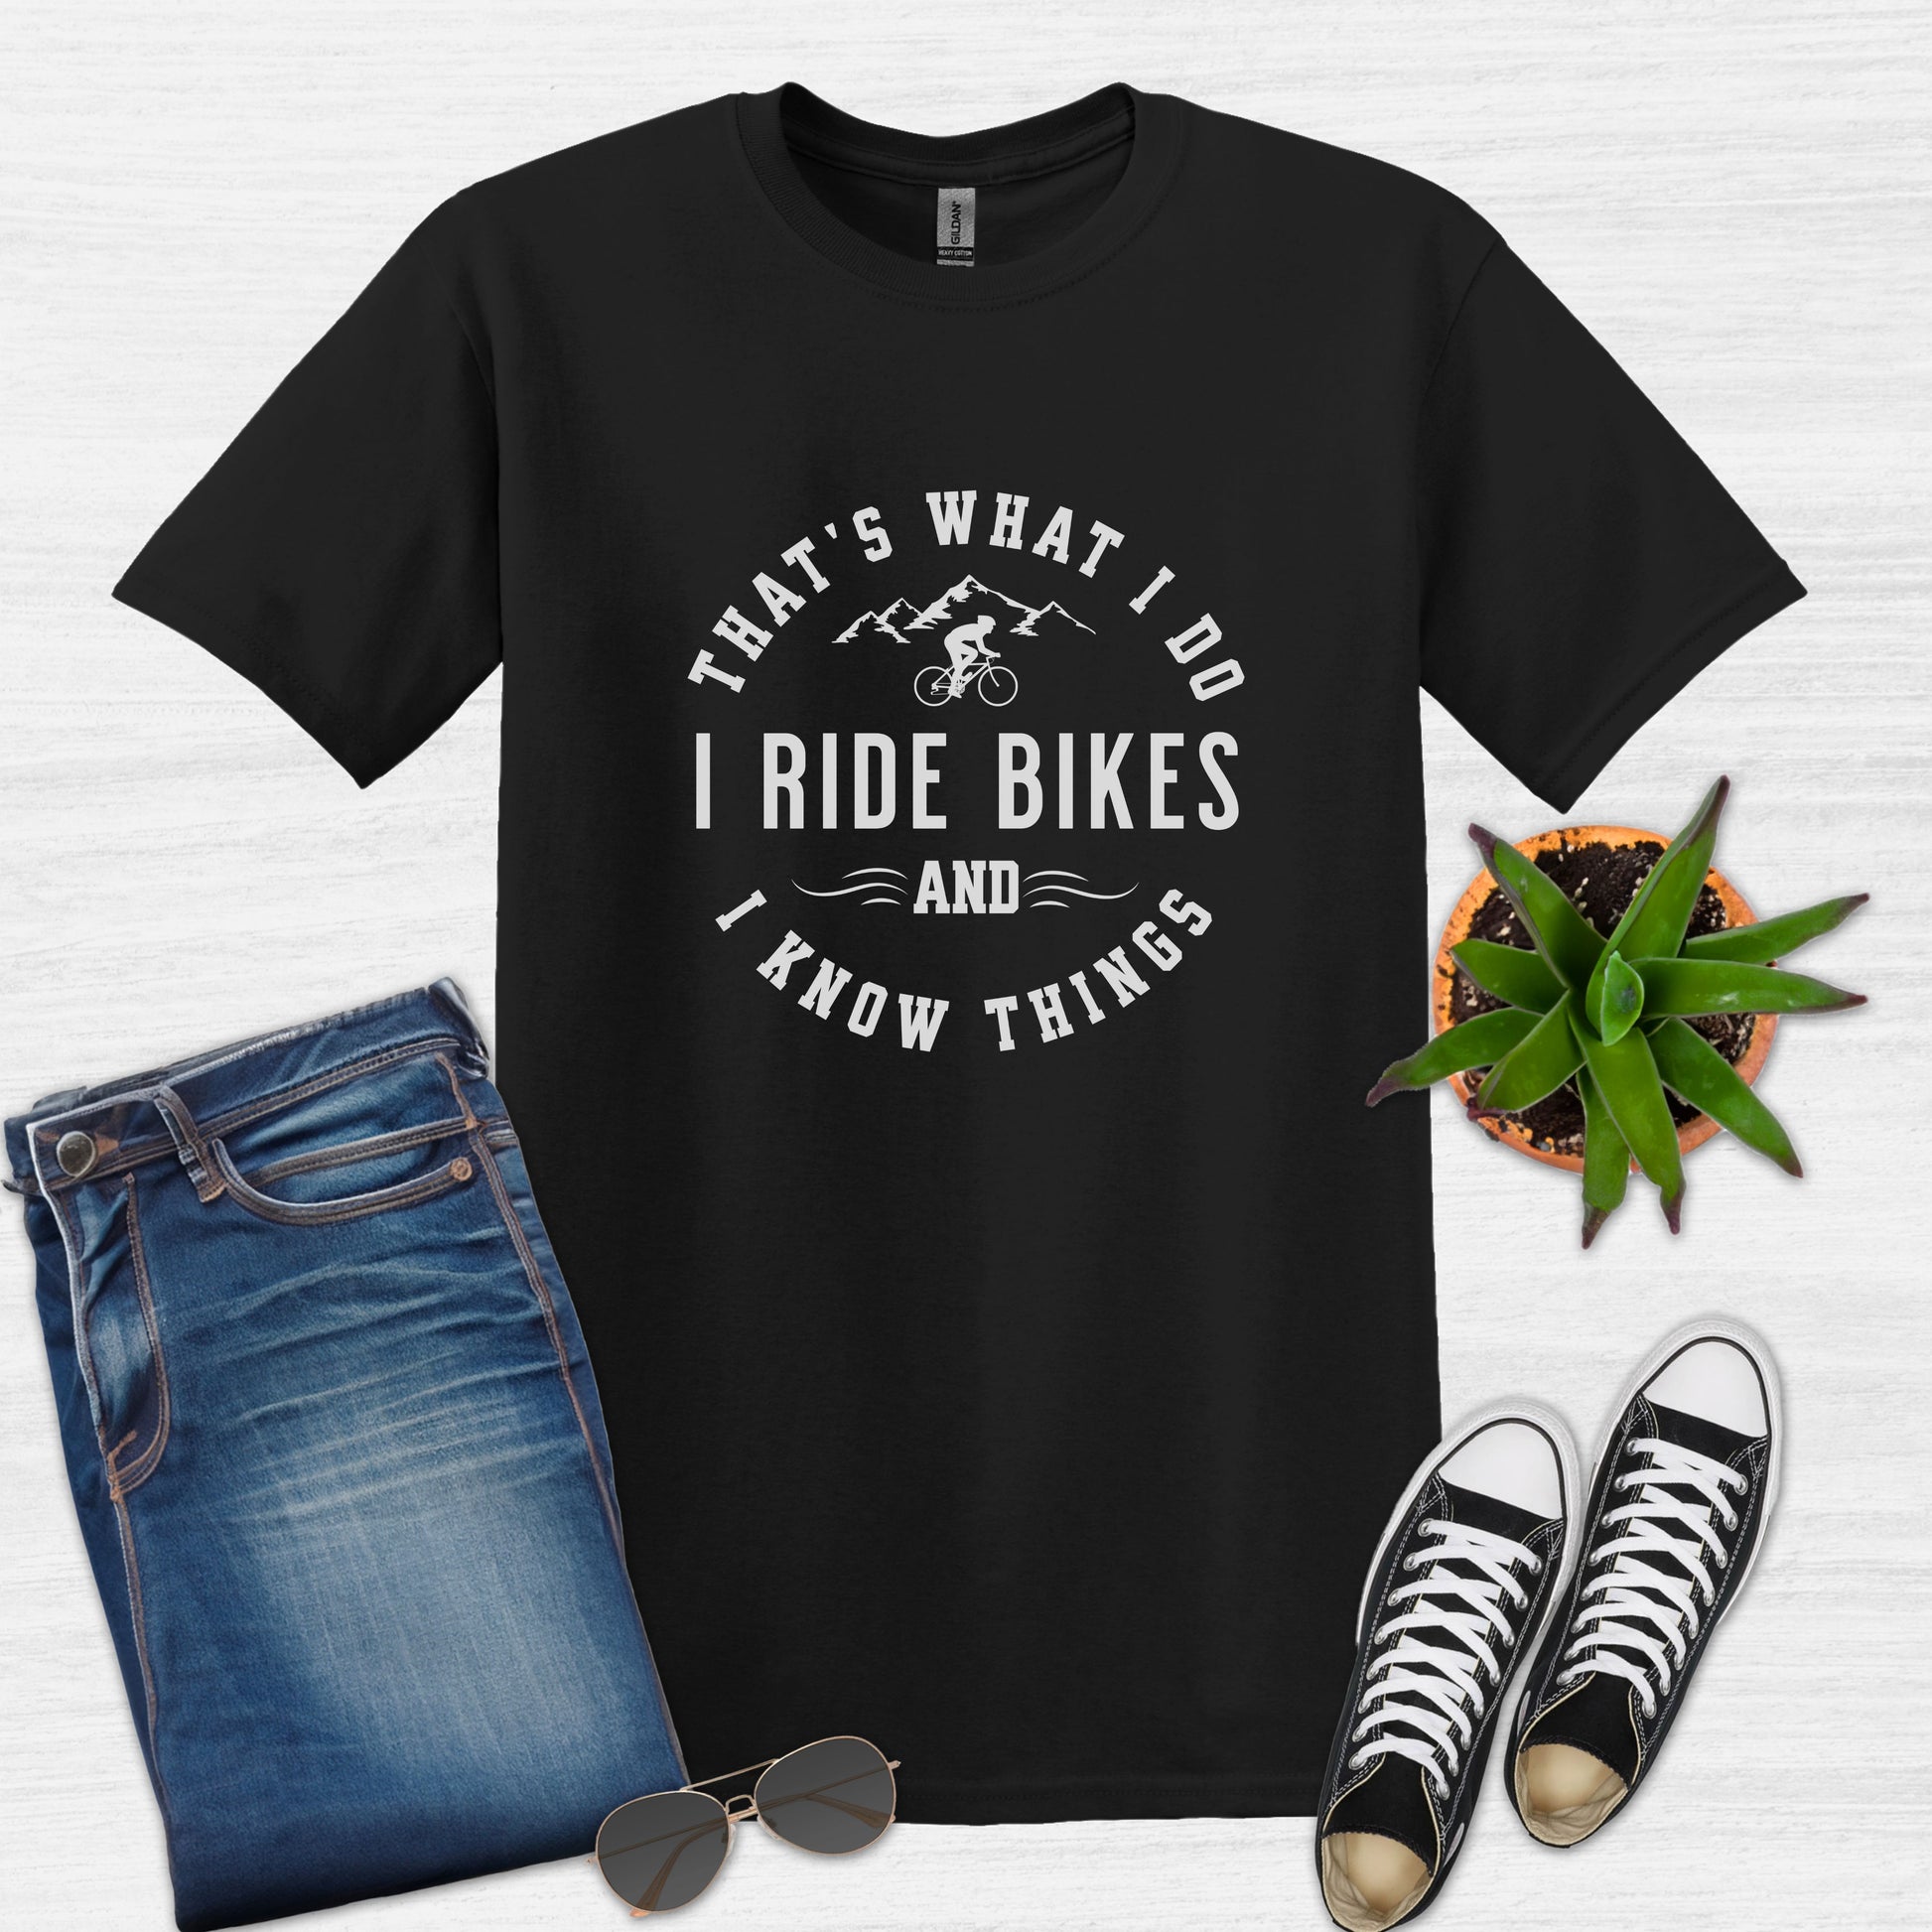 Bike Bliss I Ride Bikes and I know Things MTB T-Shirt for Men Black